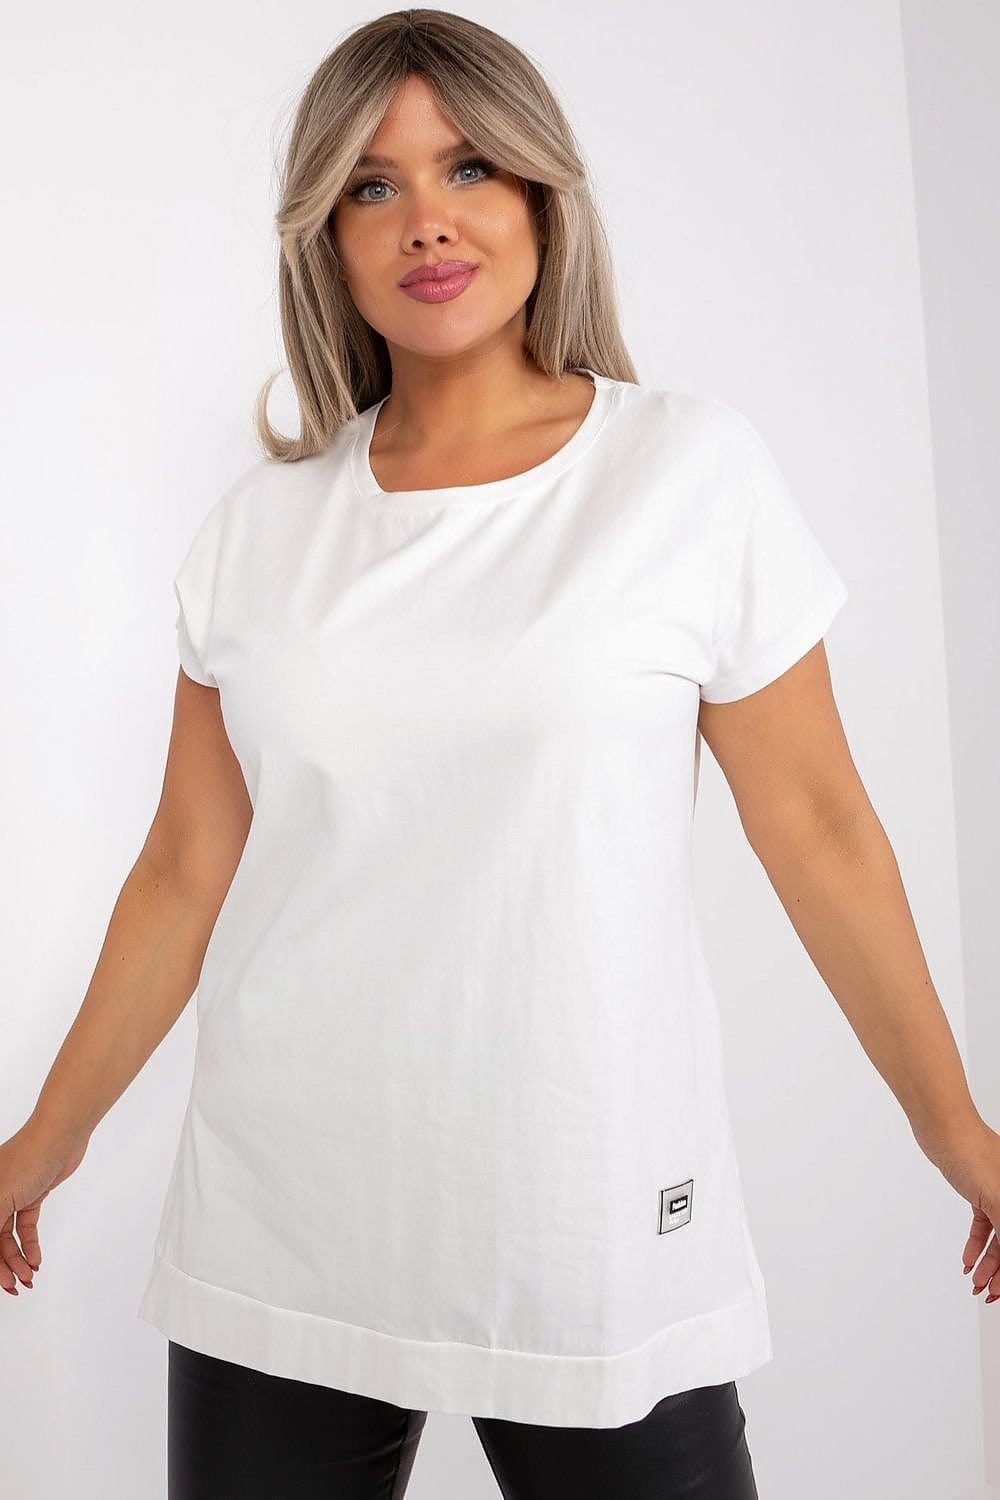 Teon Clothing EU Plus size cotton t-shirt